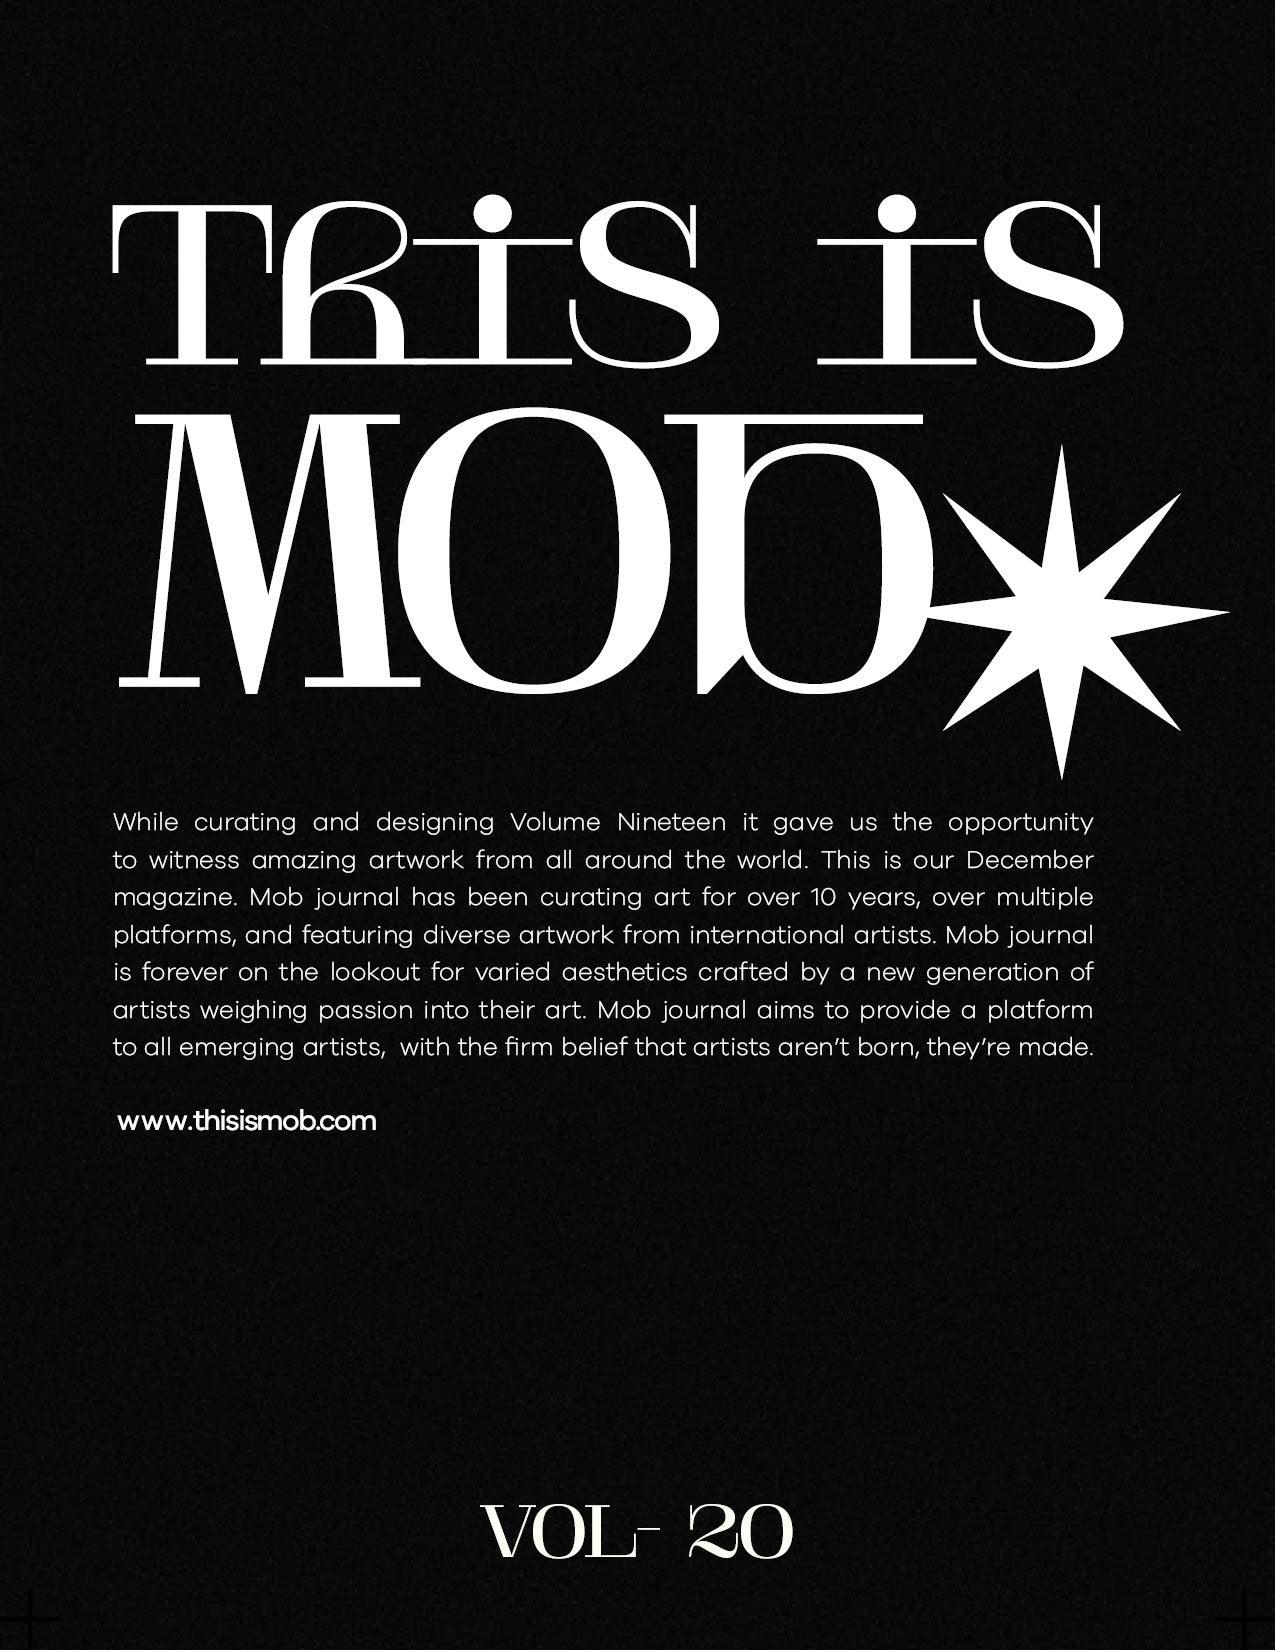 MOB JOURNAL | VOLUME TWENTY | ISSUE #52 - Mob Journal